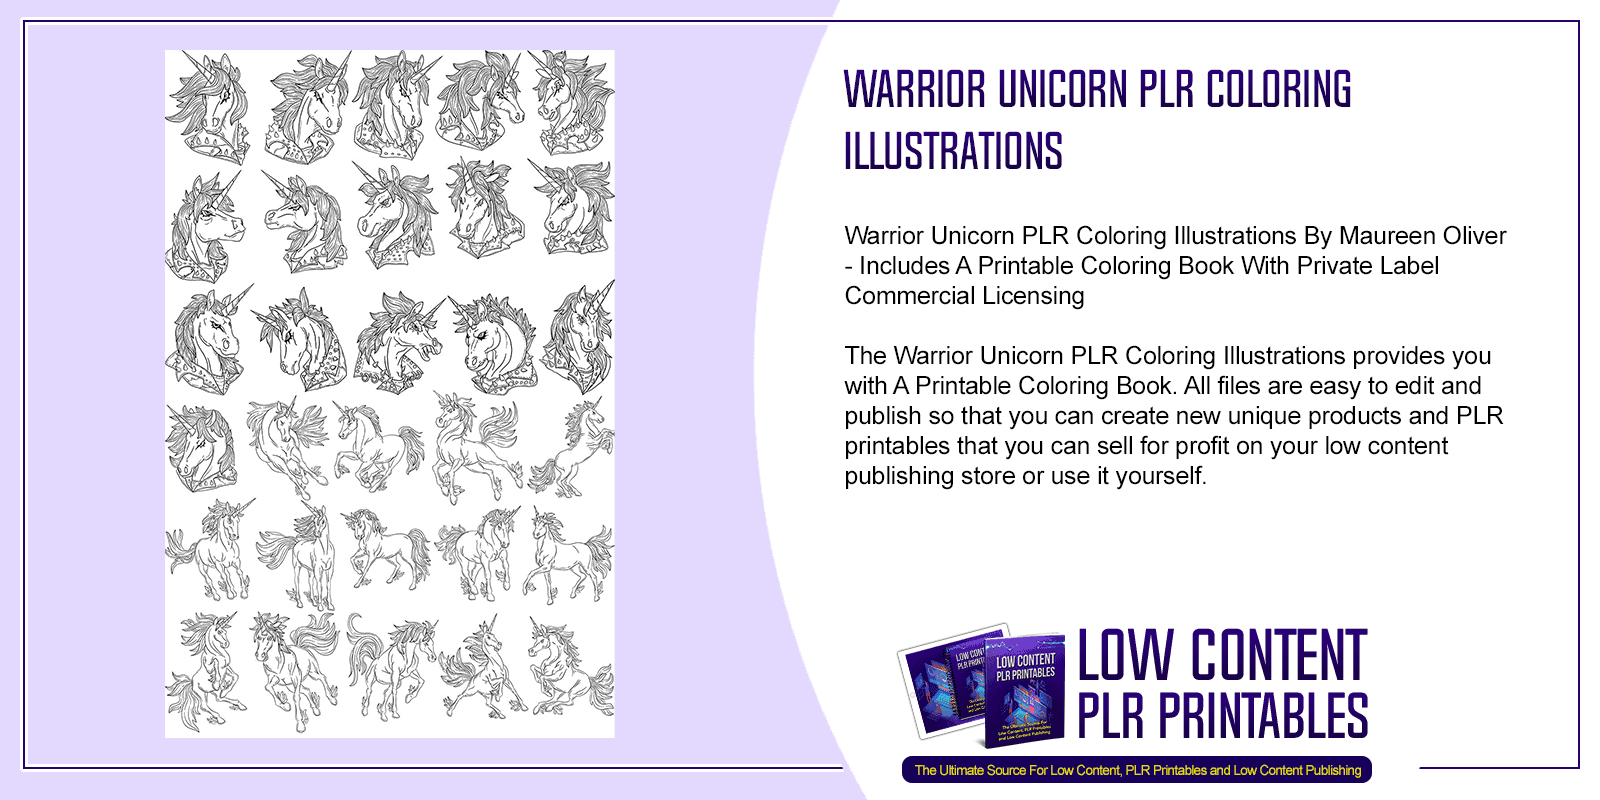 Warrior Unicorn PLR Coloring Illustrations